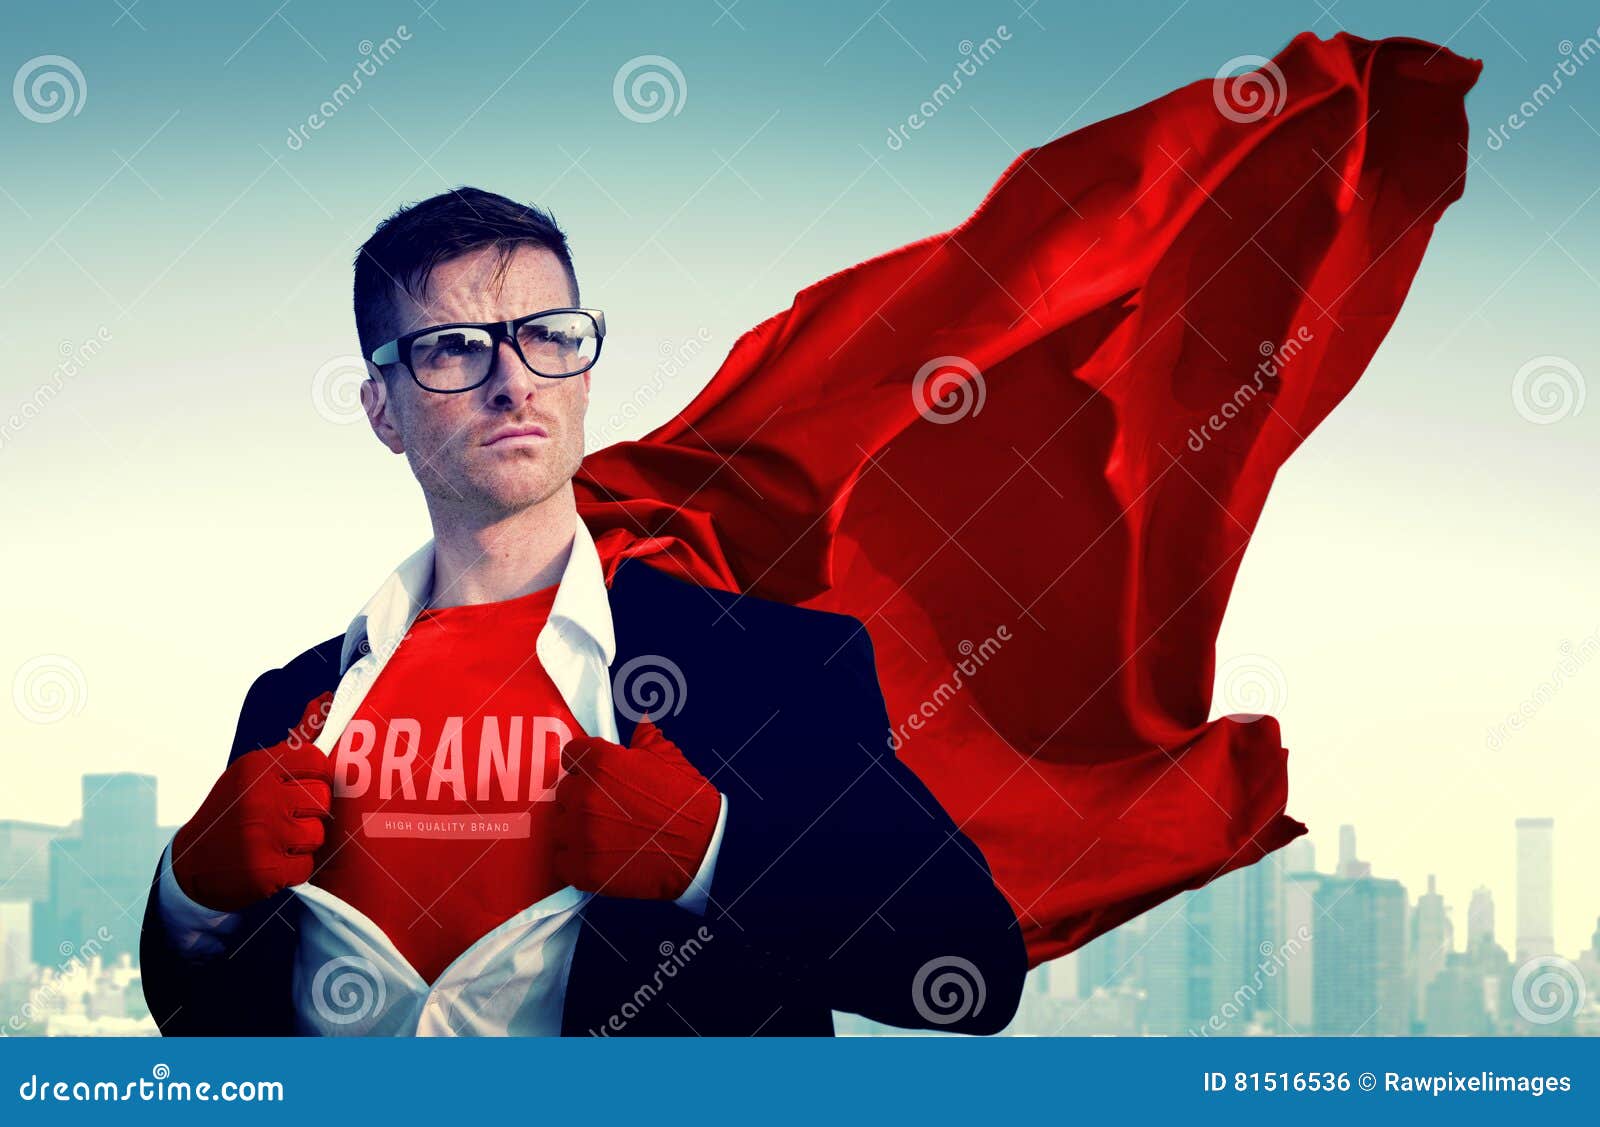 brand branding commercial marketing advertisement business concept